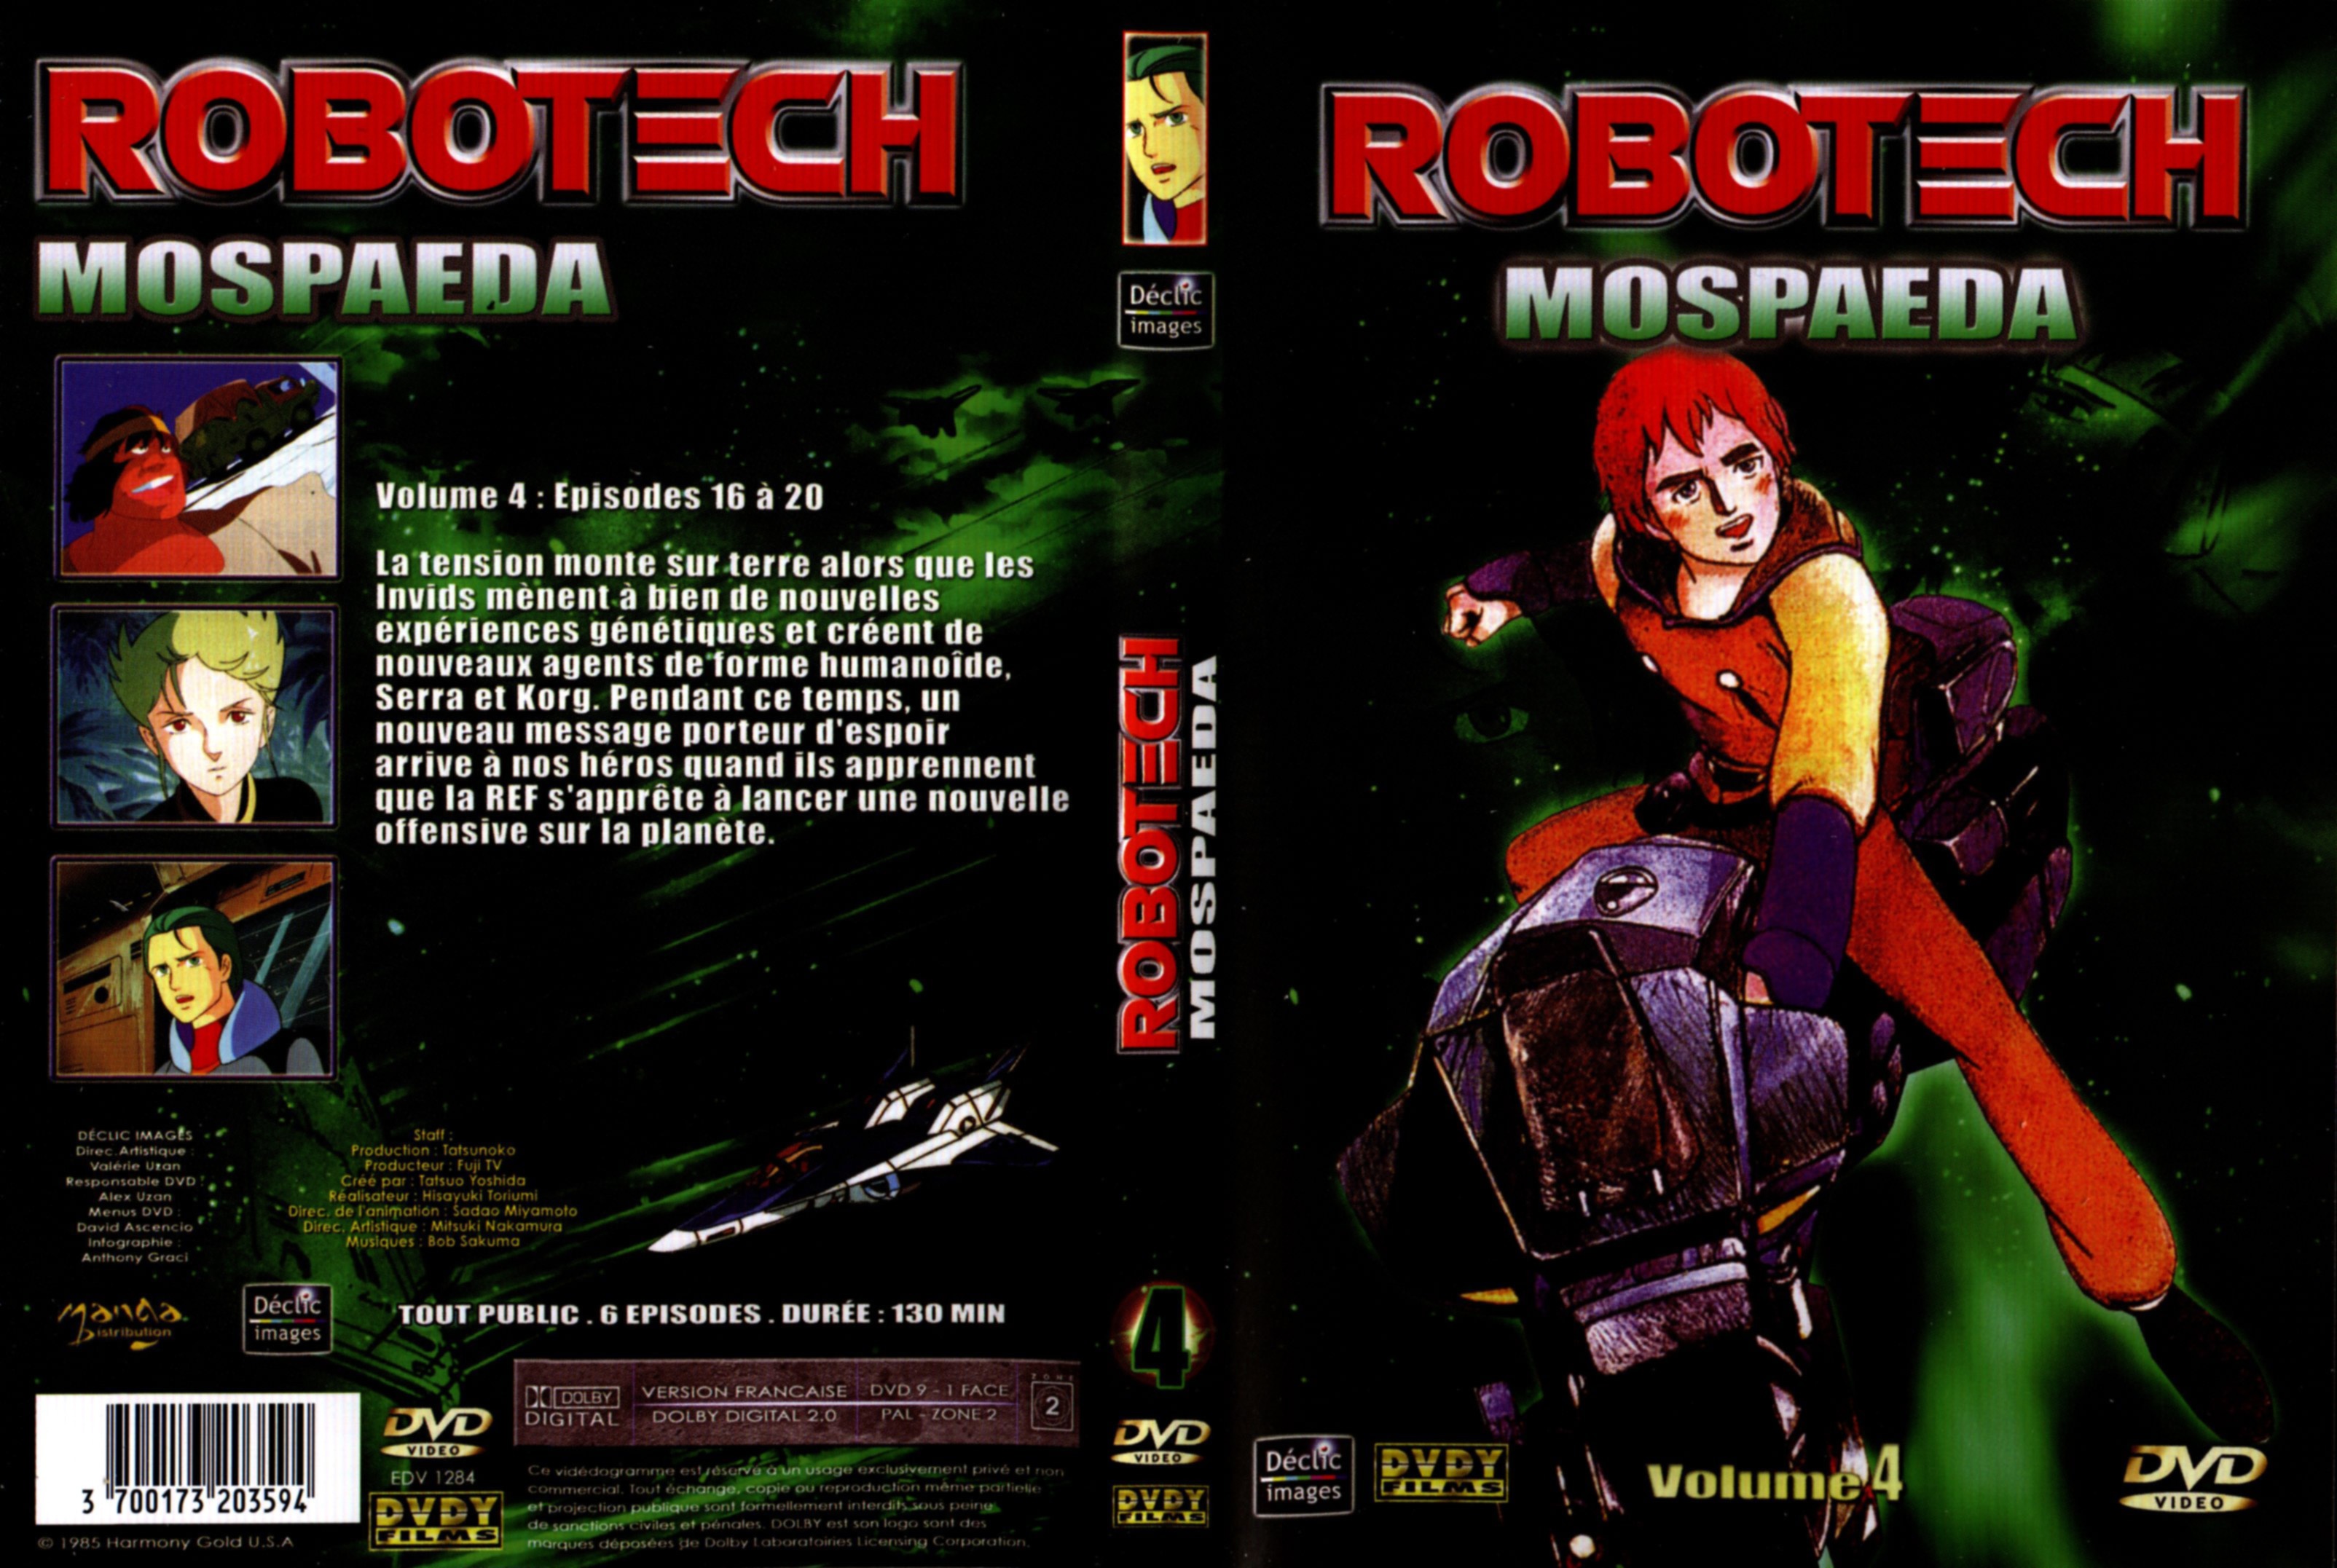 Jaquette DVD Robotech Mospaeda vol 04